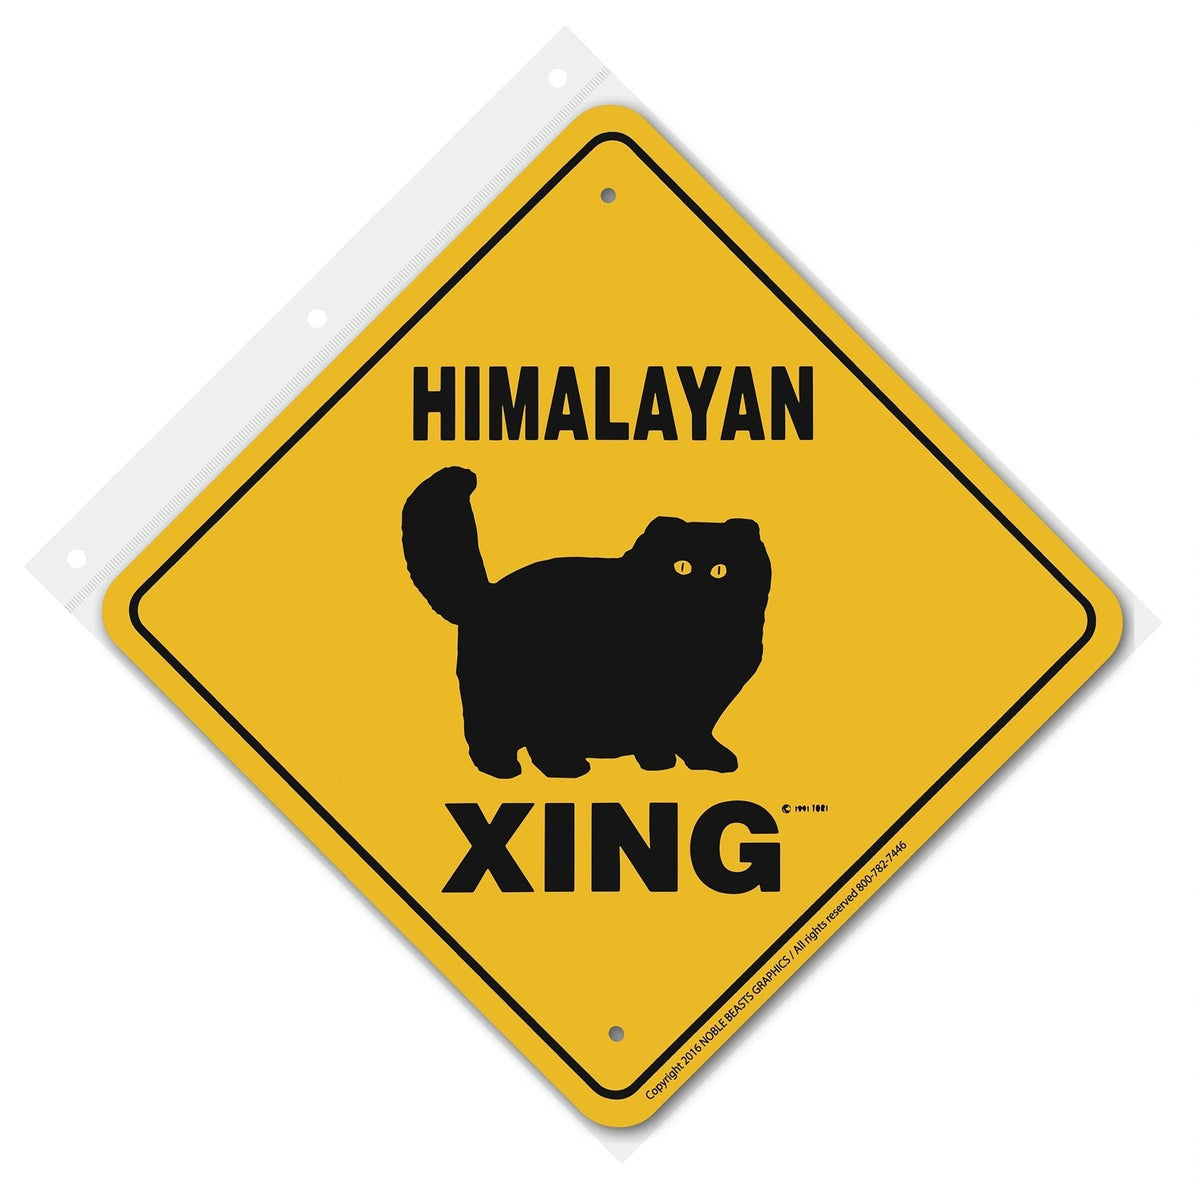 Himalayan Xing Sign Aluminum 12 in X 12 in #20694